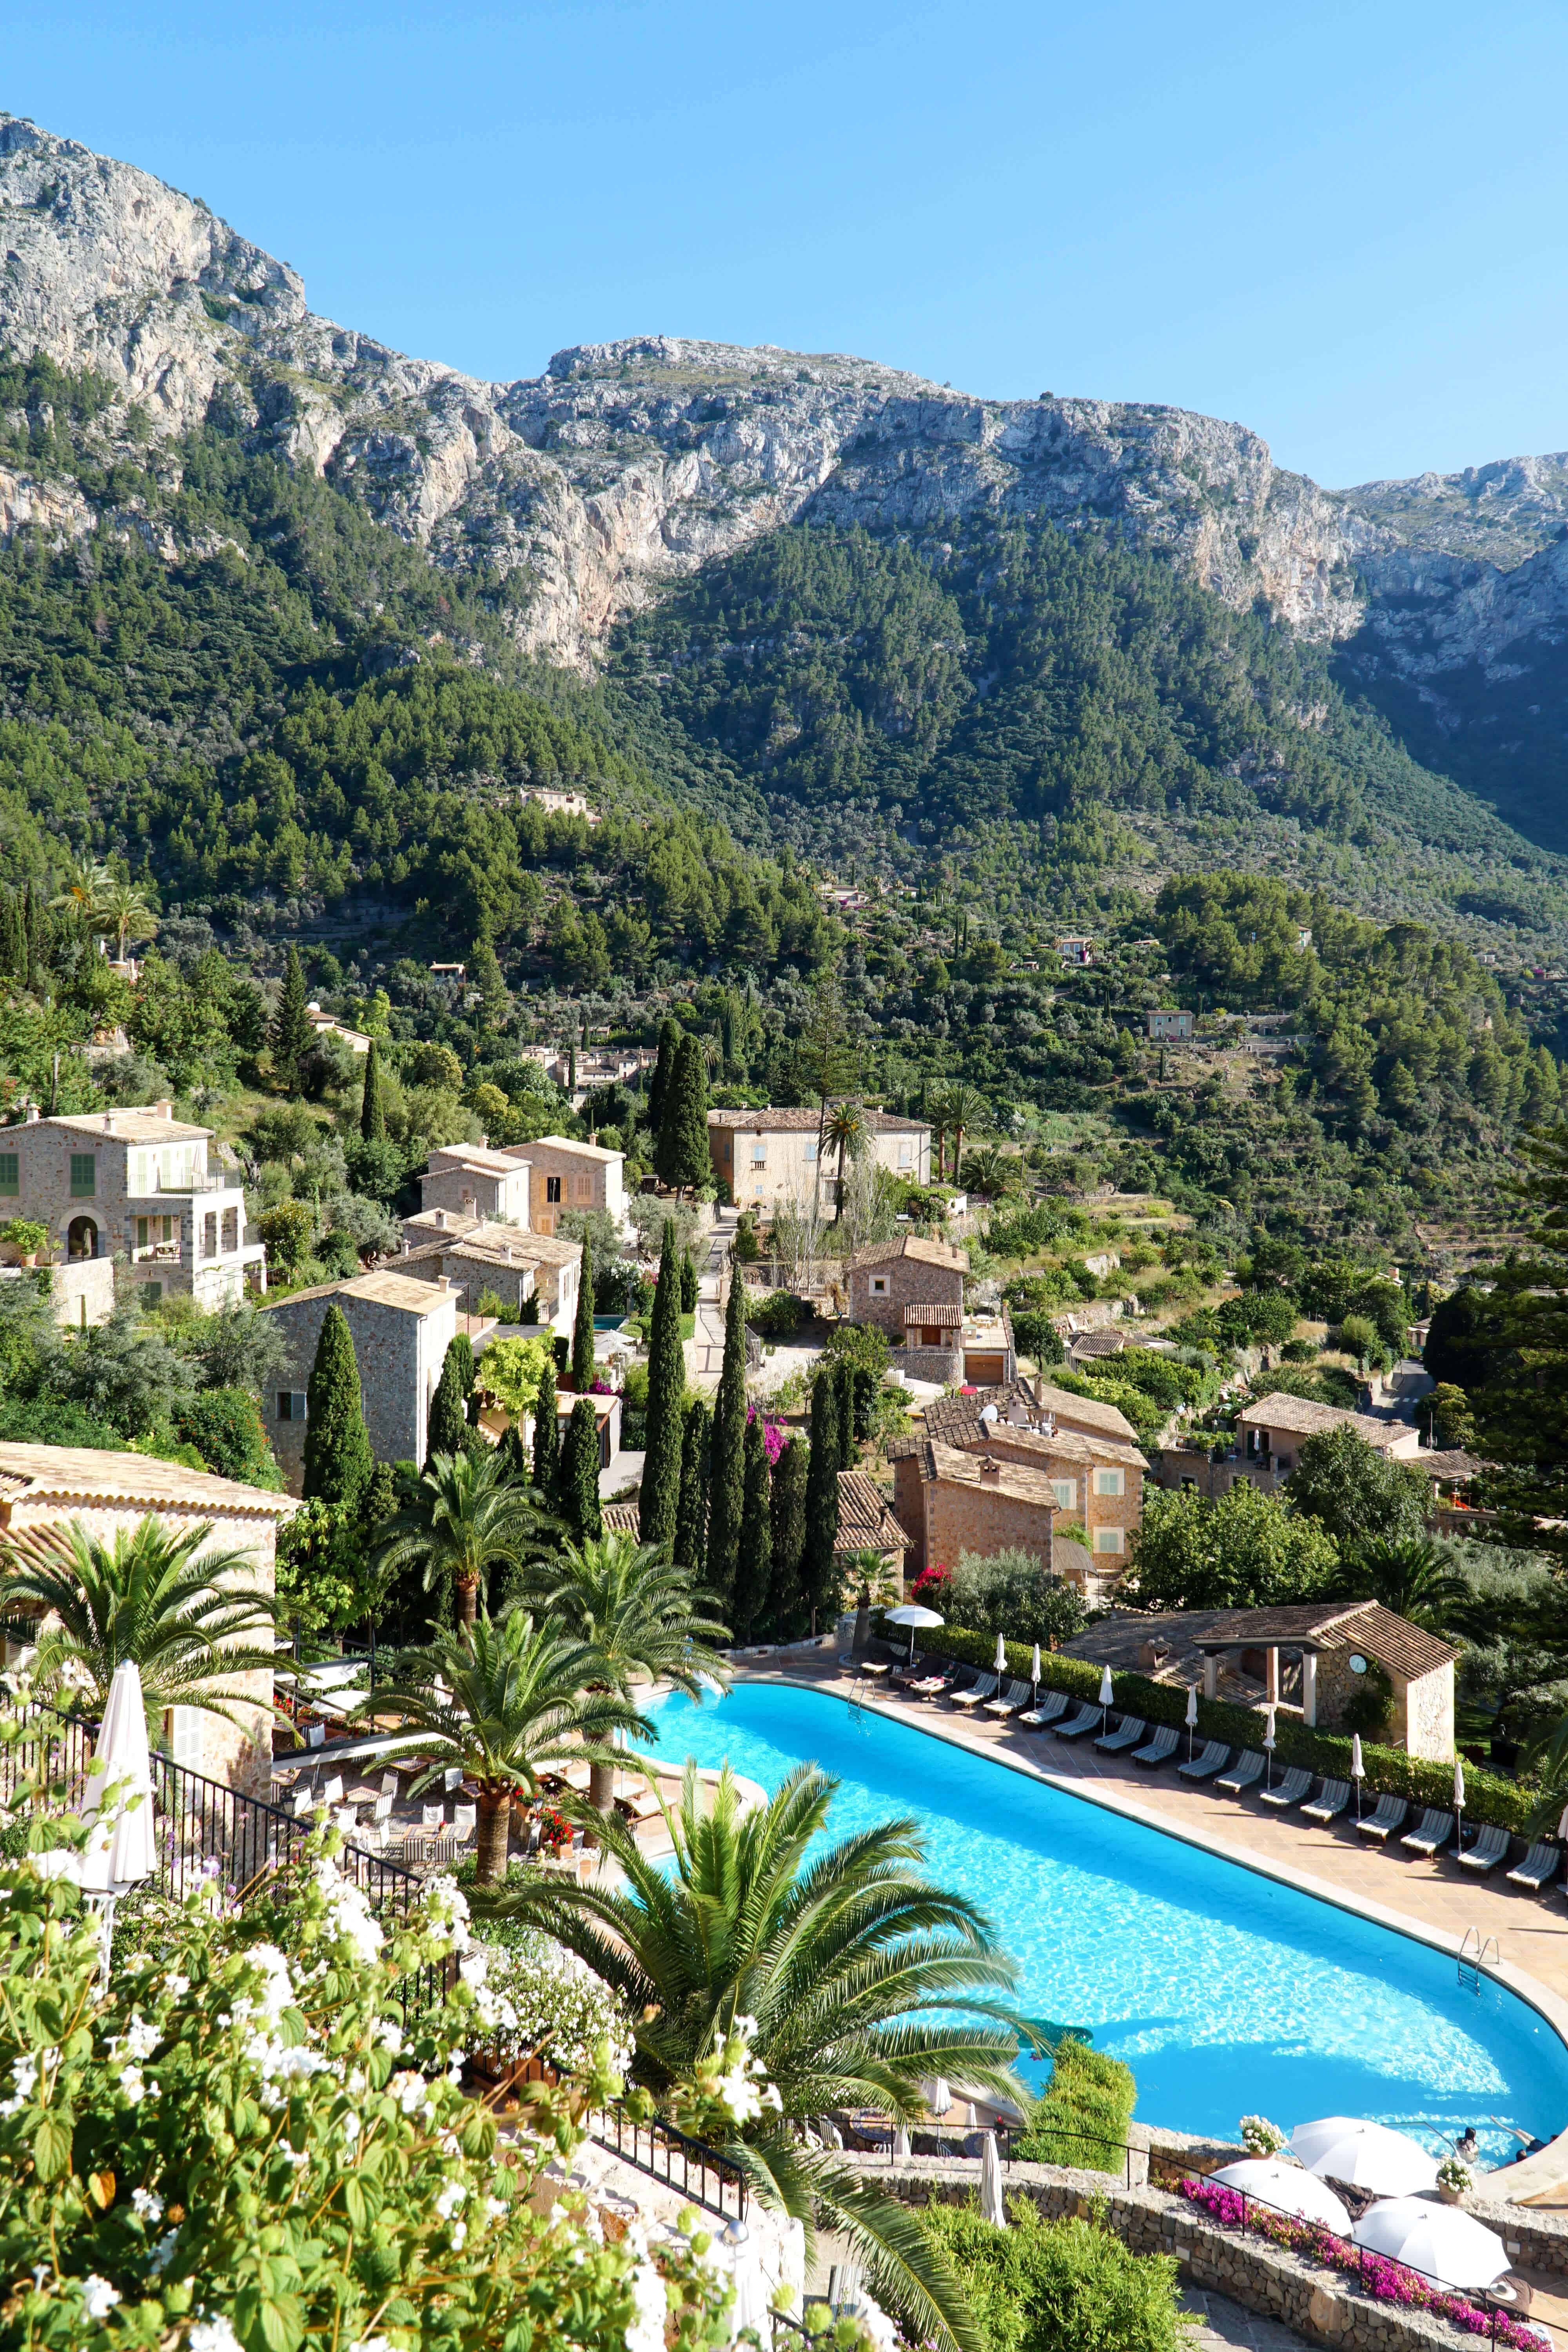 Staying at Belmond La Residencia in Mallorca, Spain - The Republic